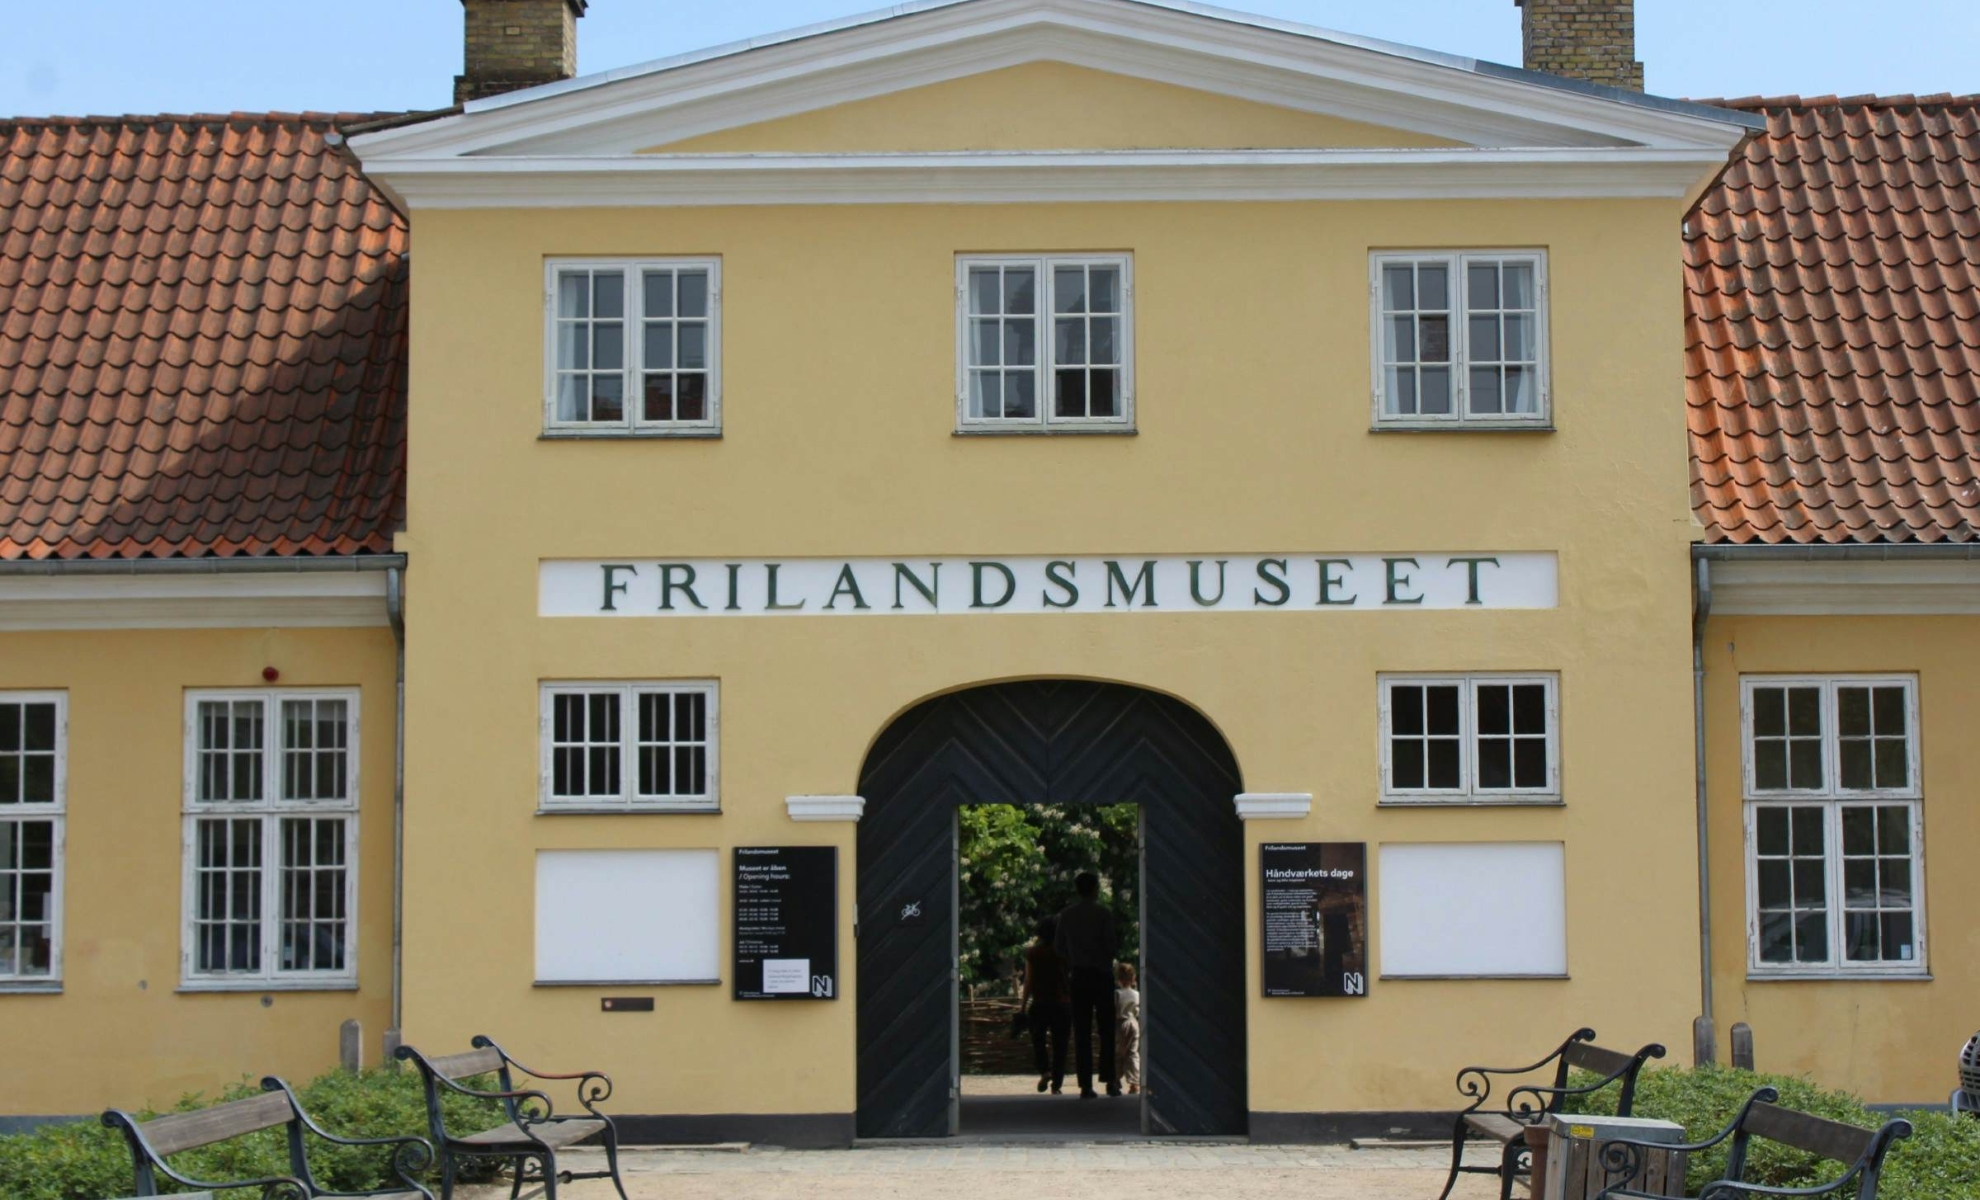 Le Frilandsmuseet, Copenhague, Danemark